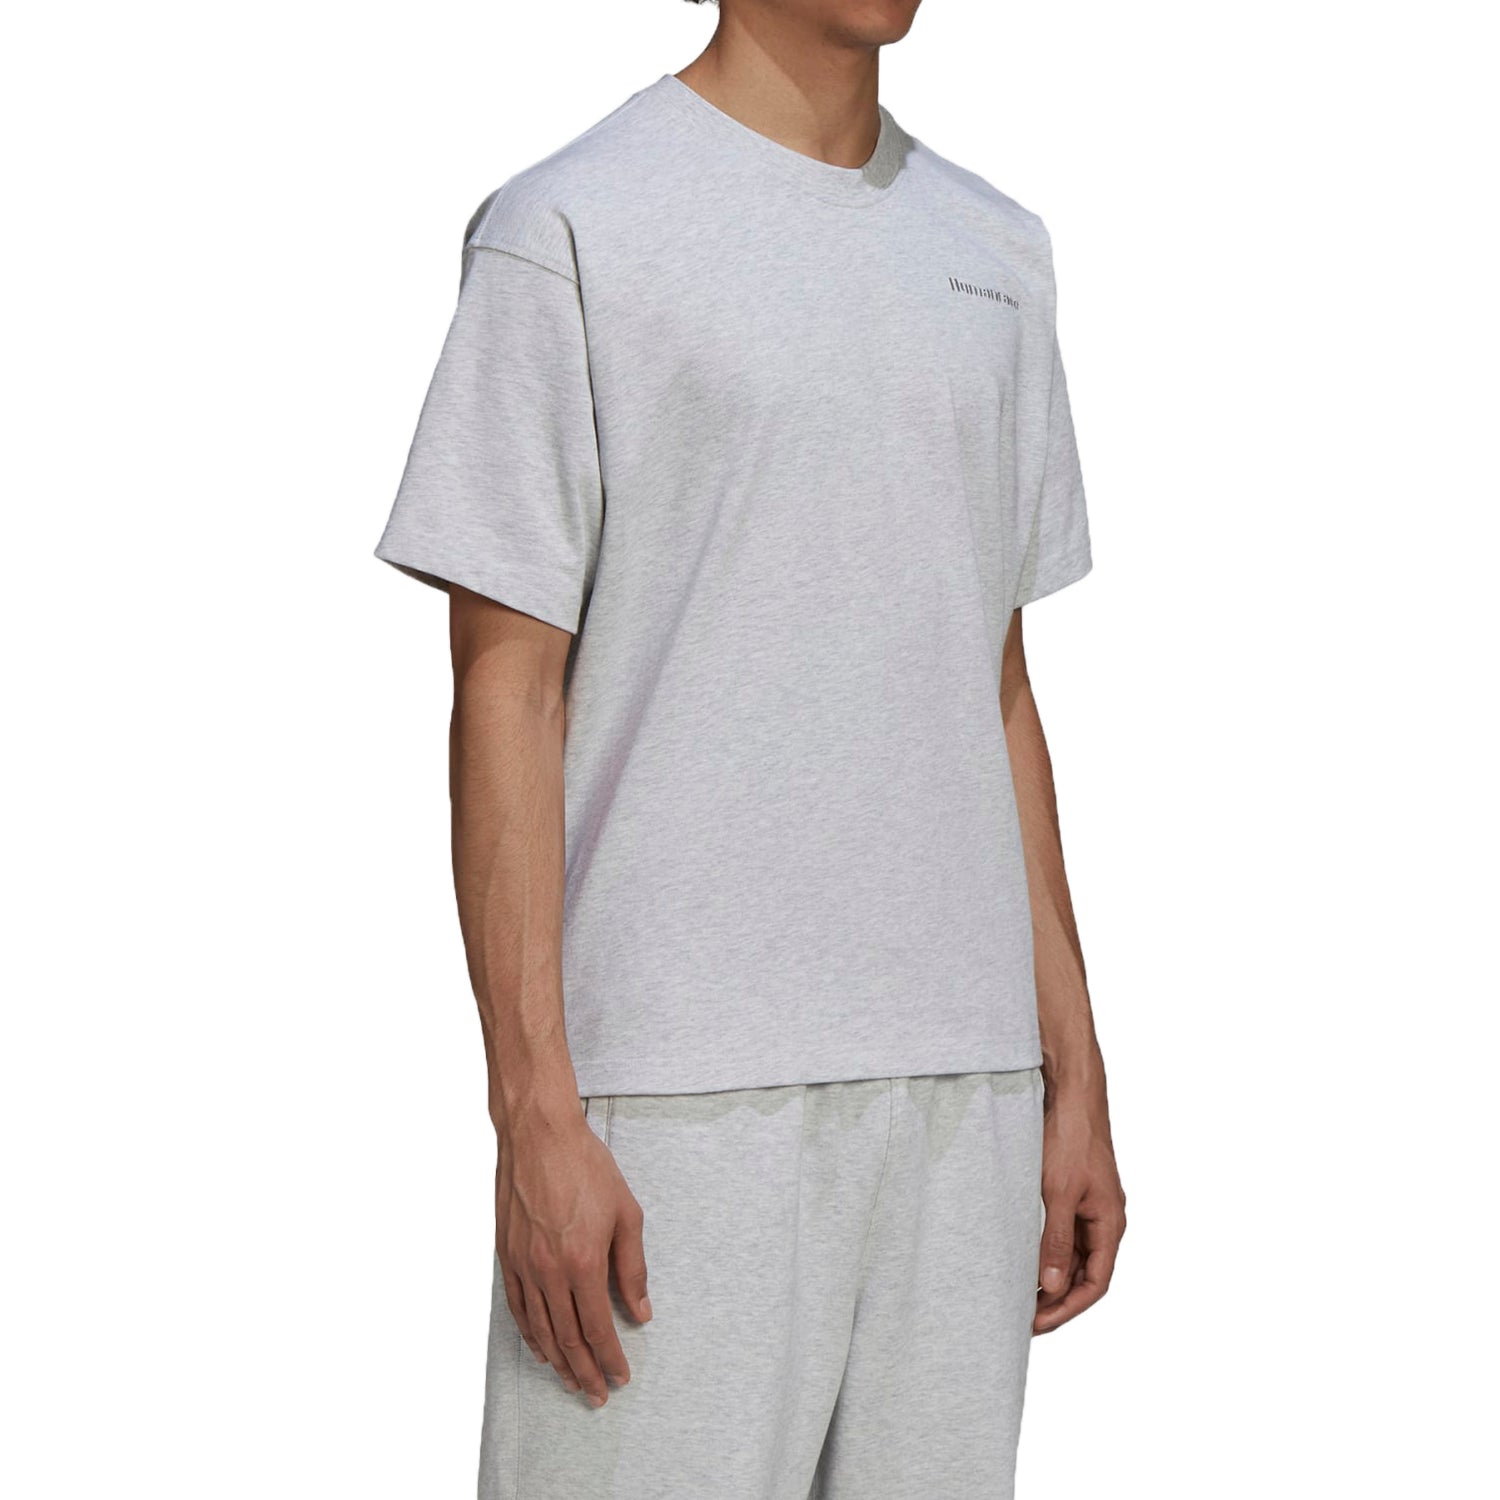 Adidas Pharrell Williams Basics Shirt Mens Style : Hb8818